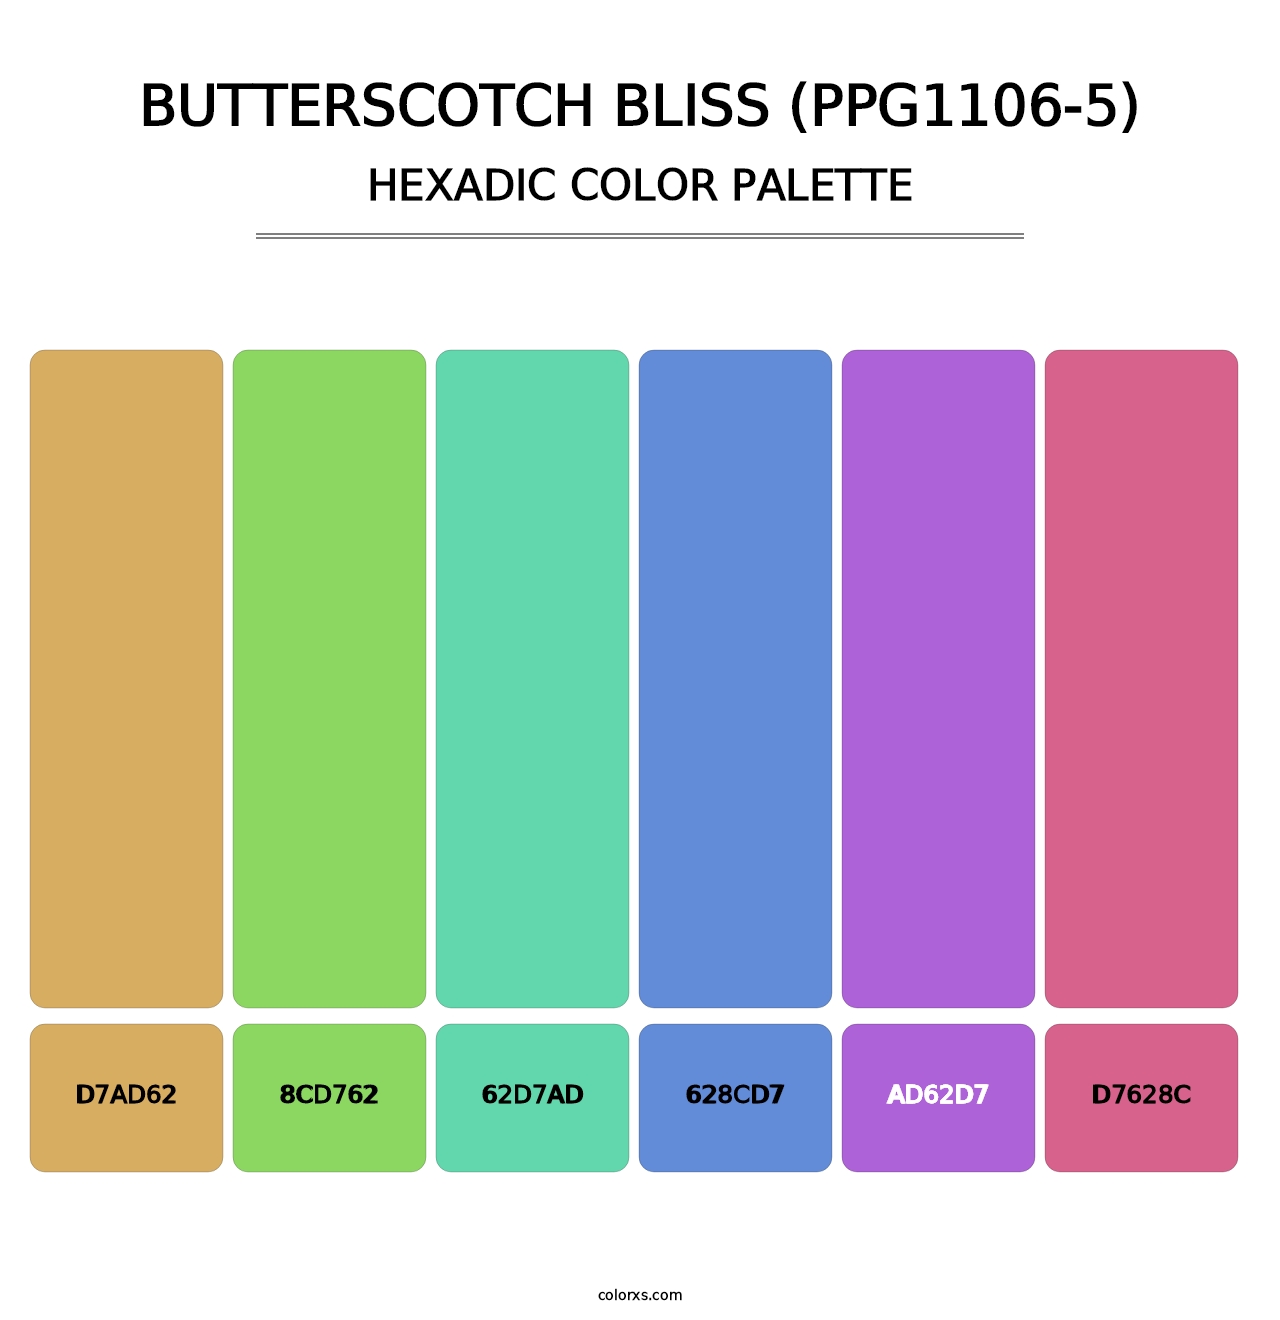 Butterscotch Bliss (PPG1106-5) - Hexadic Color Palette